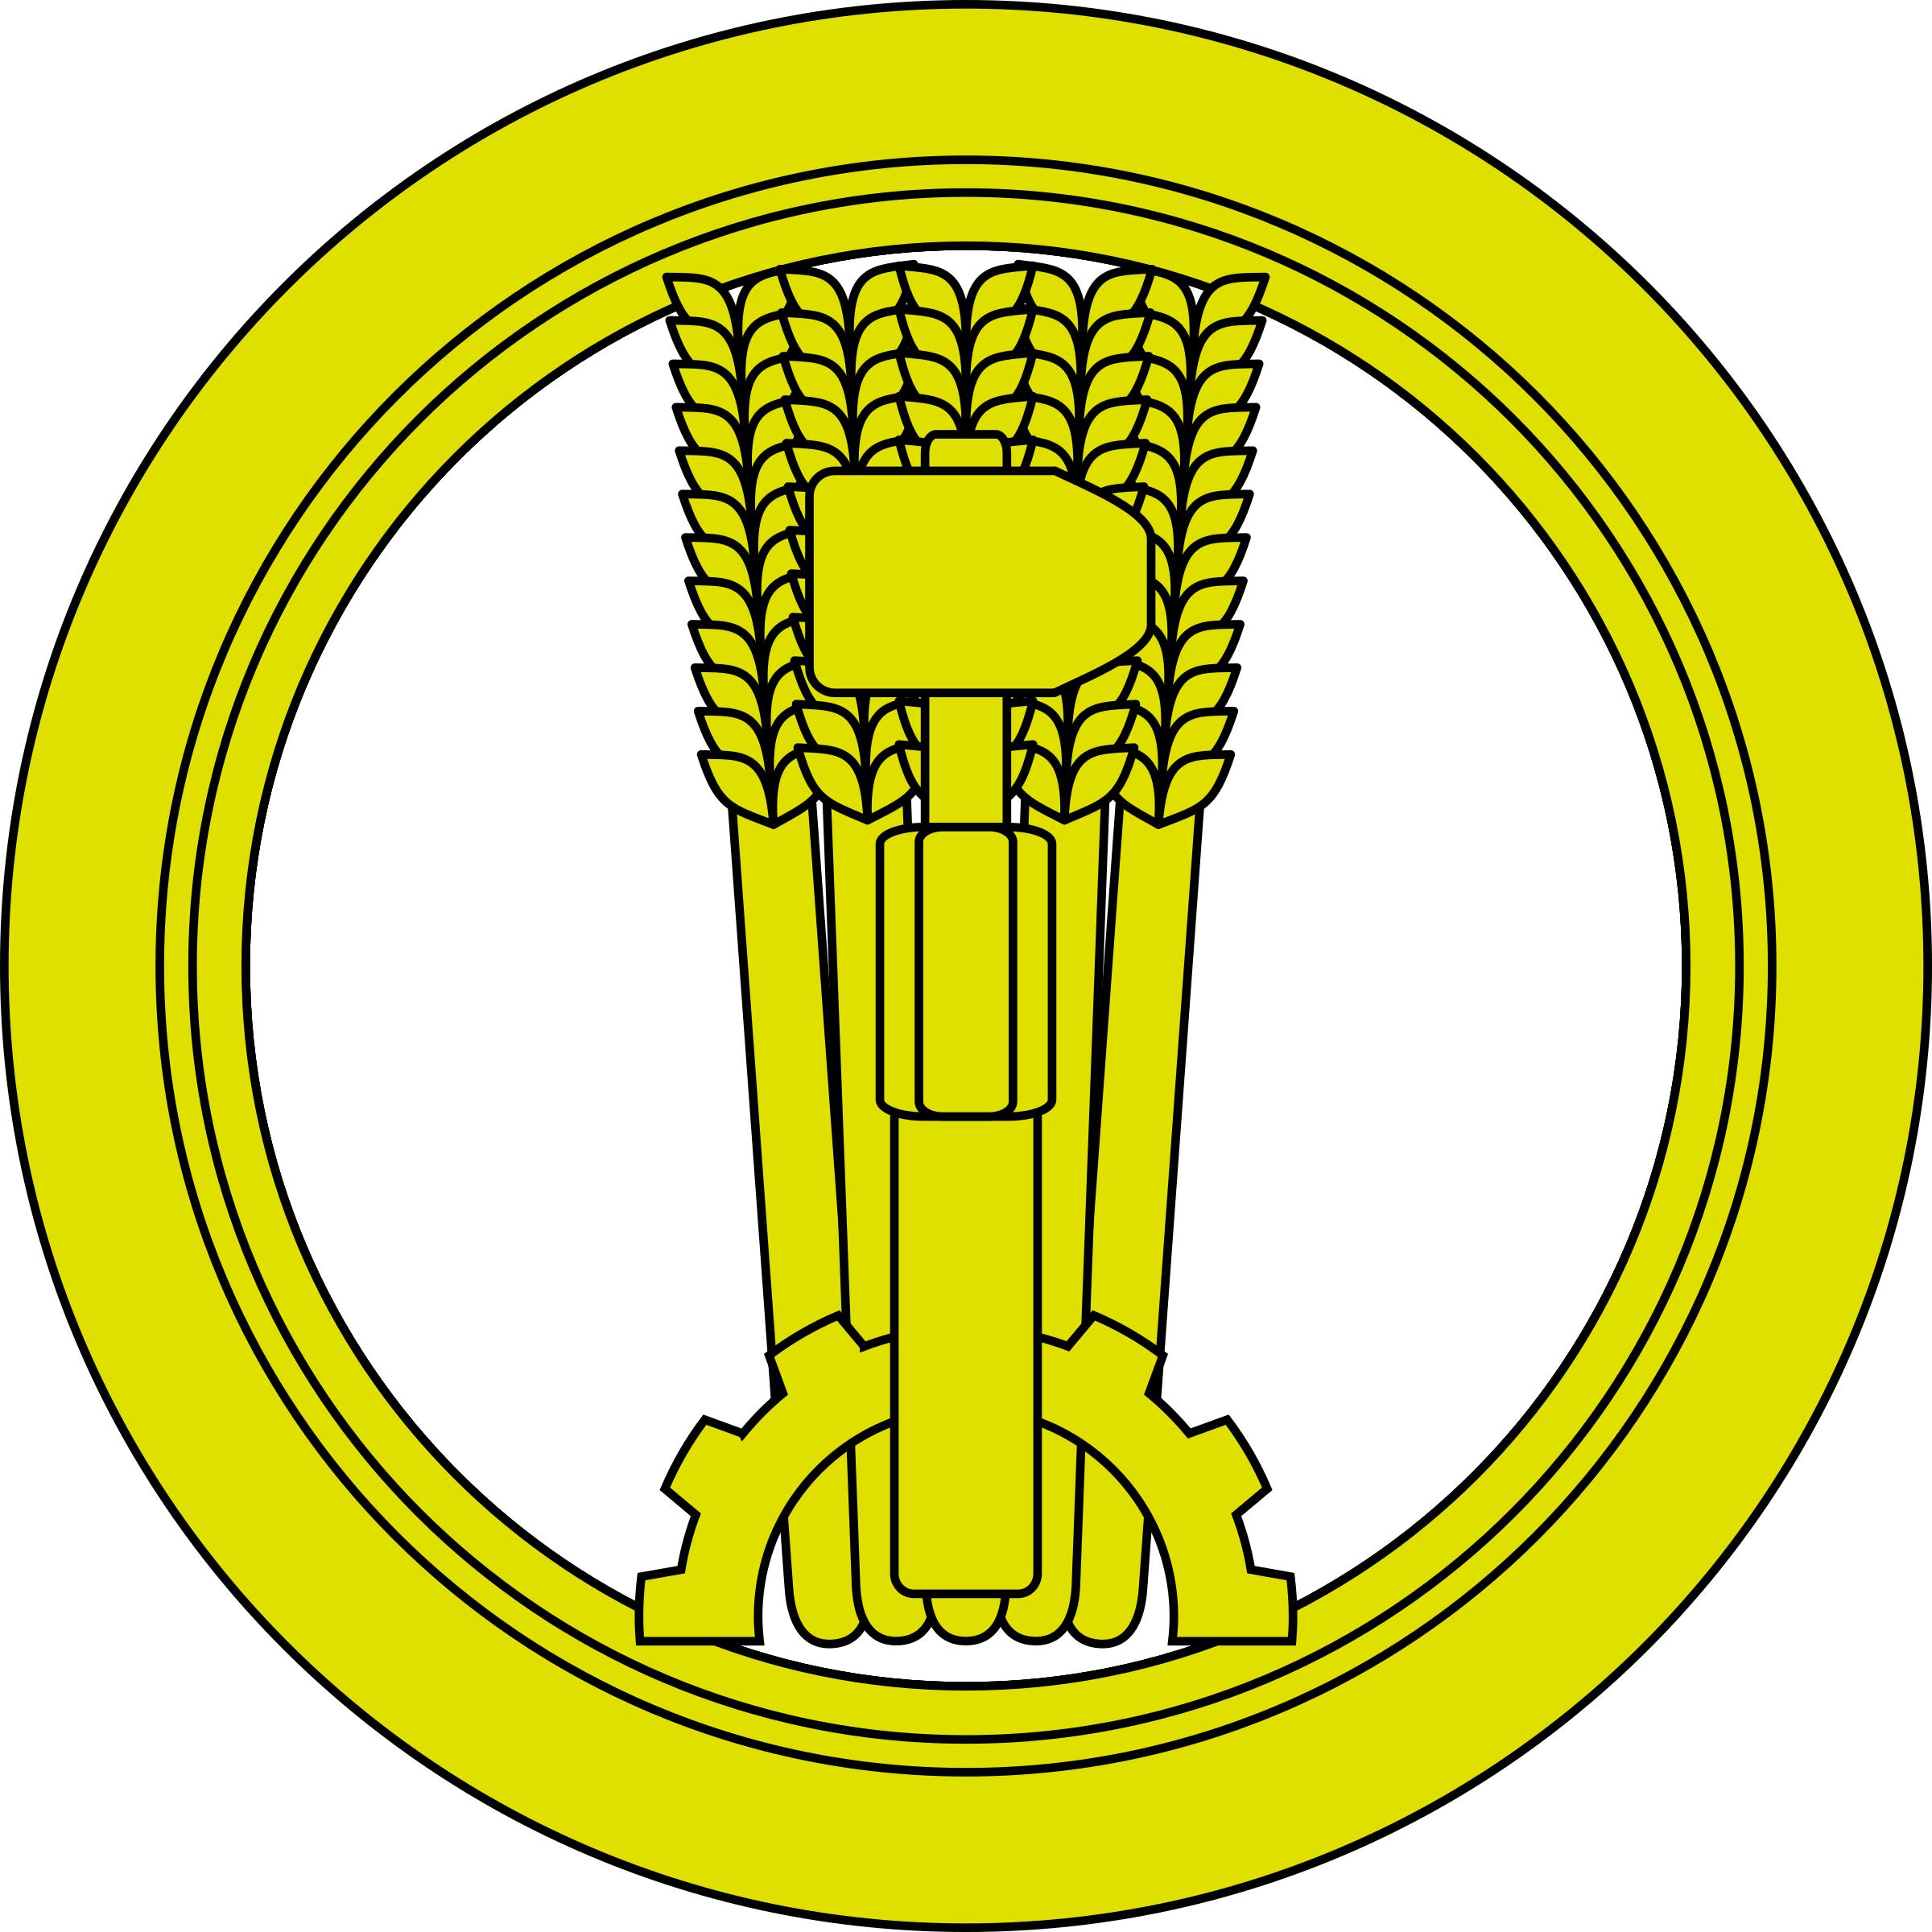 Labor logo png